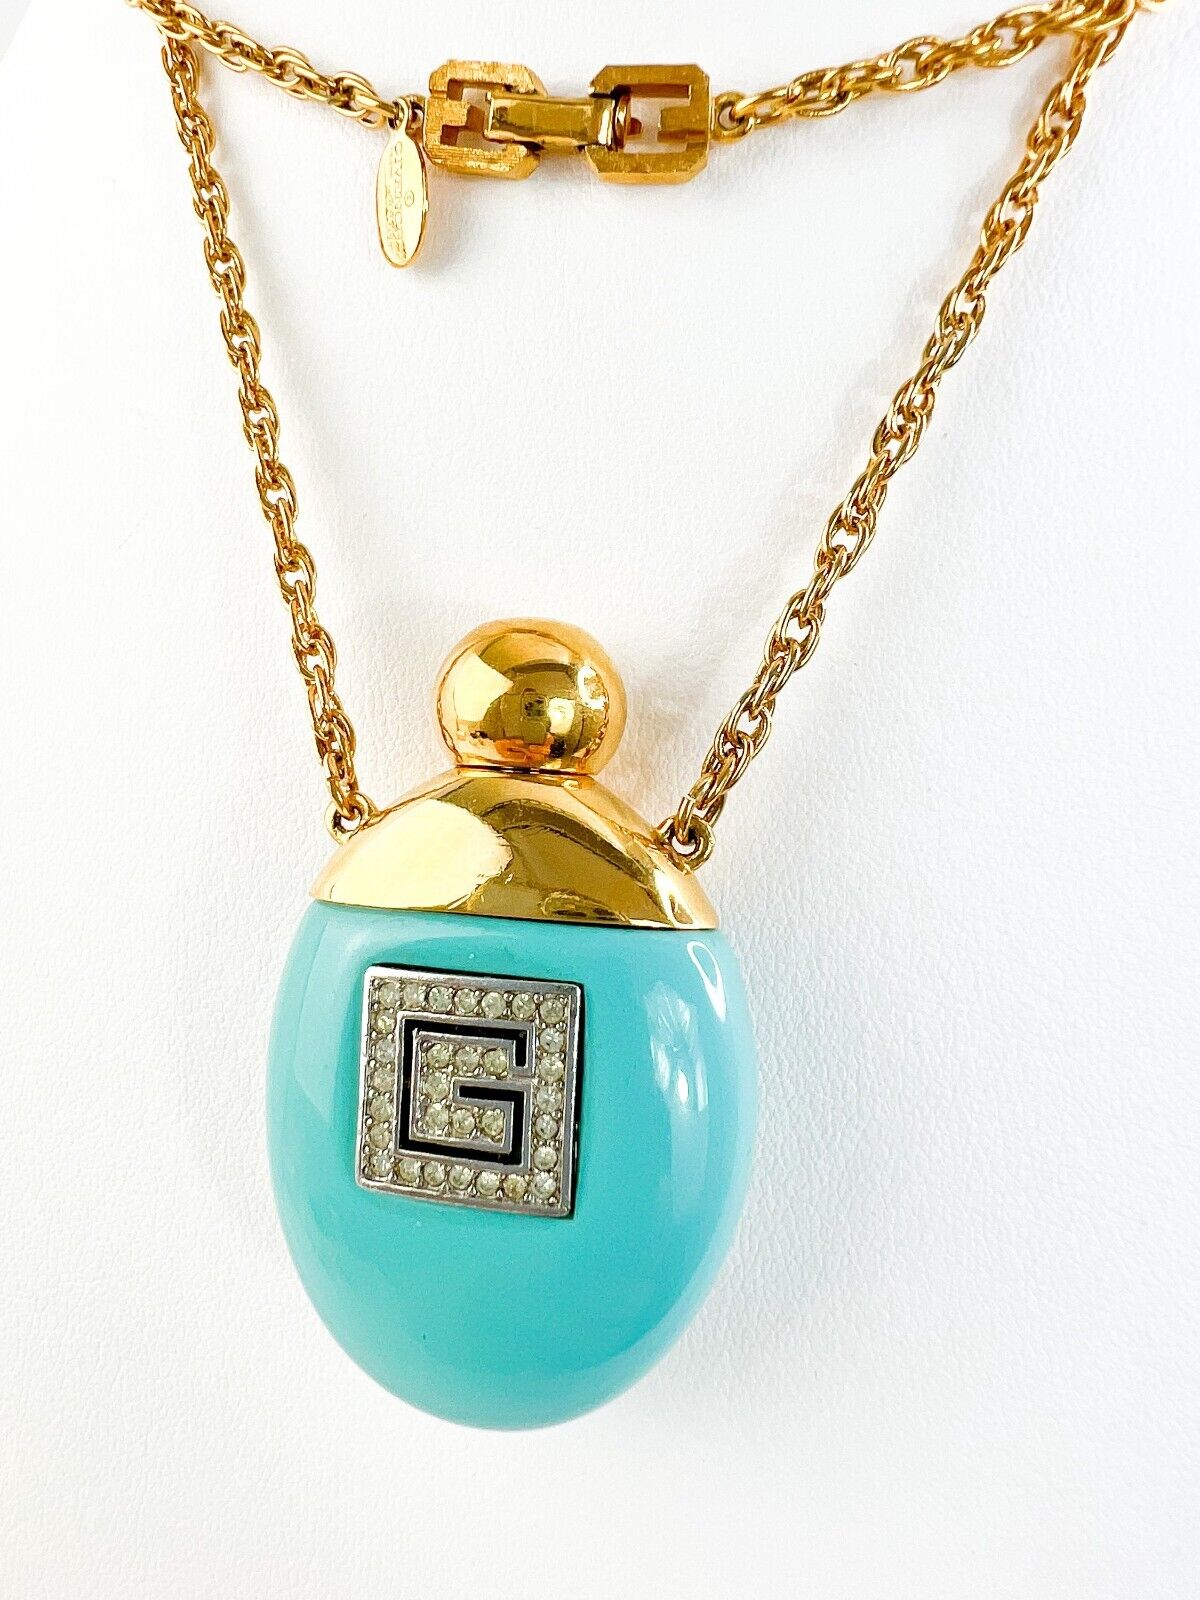 Vintage Givenchy Necklace, Necklace Gold, Necklace Large, Perfume Bottle Pendant, Givenchy Bottle Logo Necklace Blue, Personalized Gifts